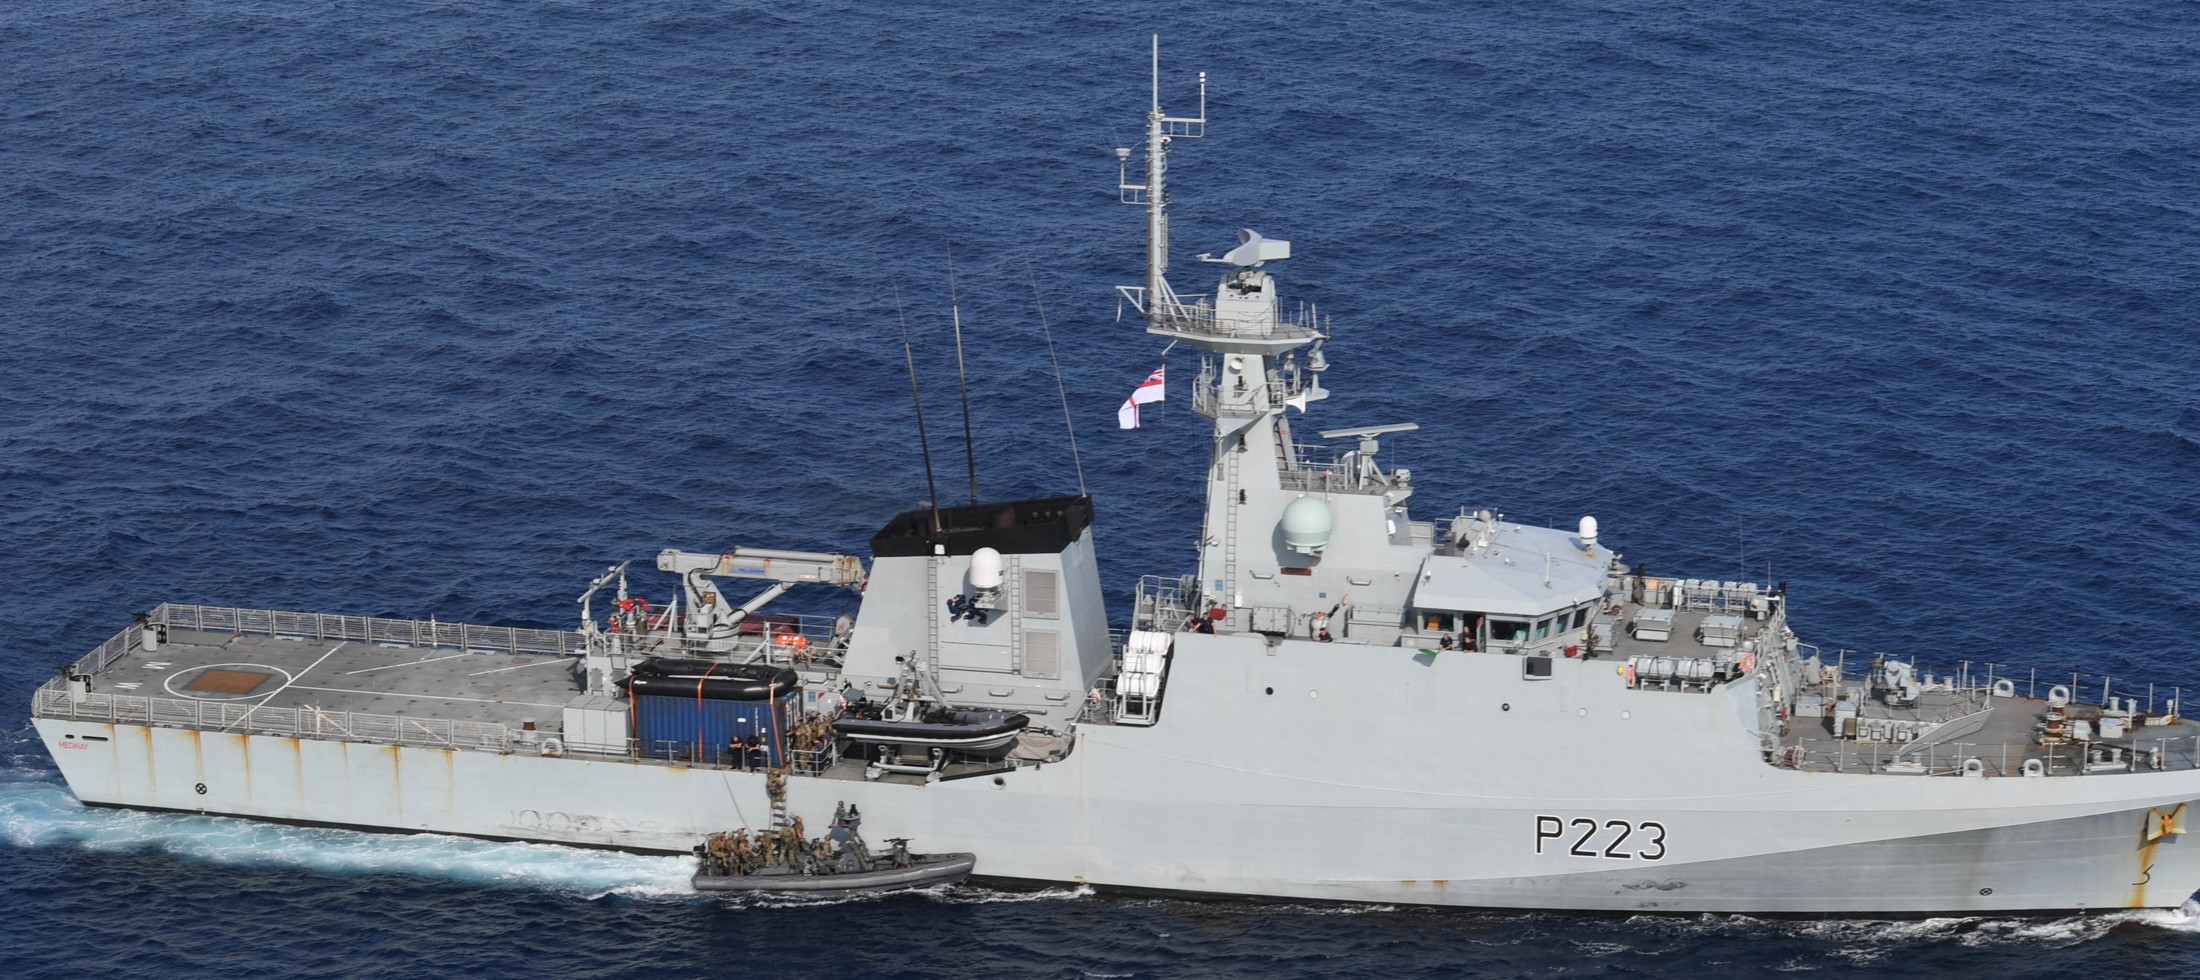 p-223 hms medway river class offshore patrol vessel opv royal navy 12